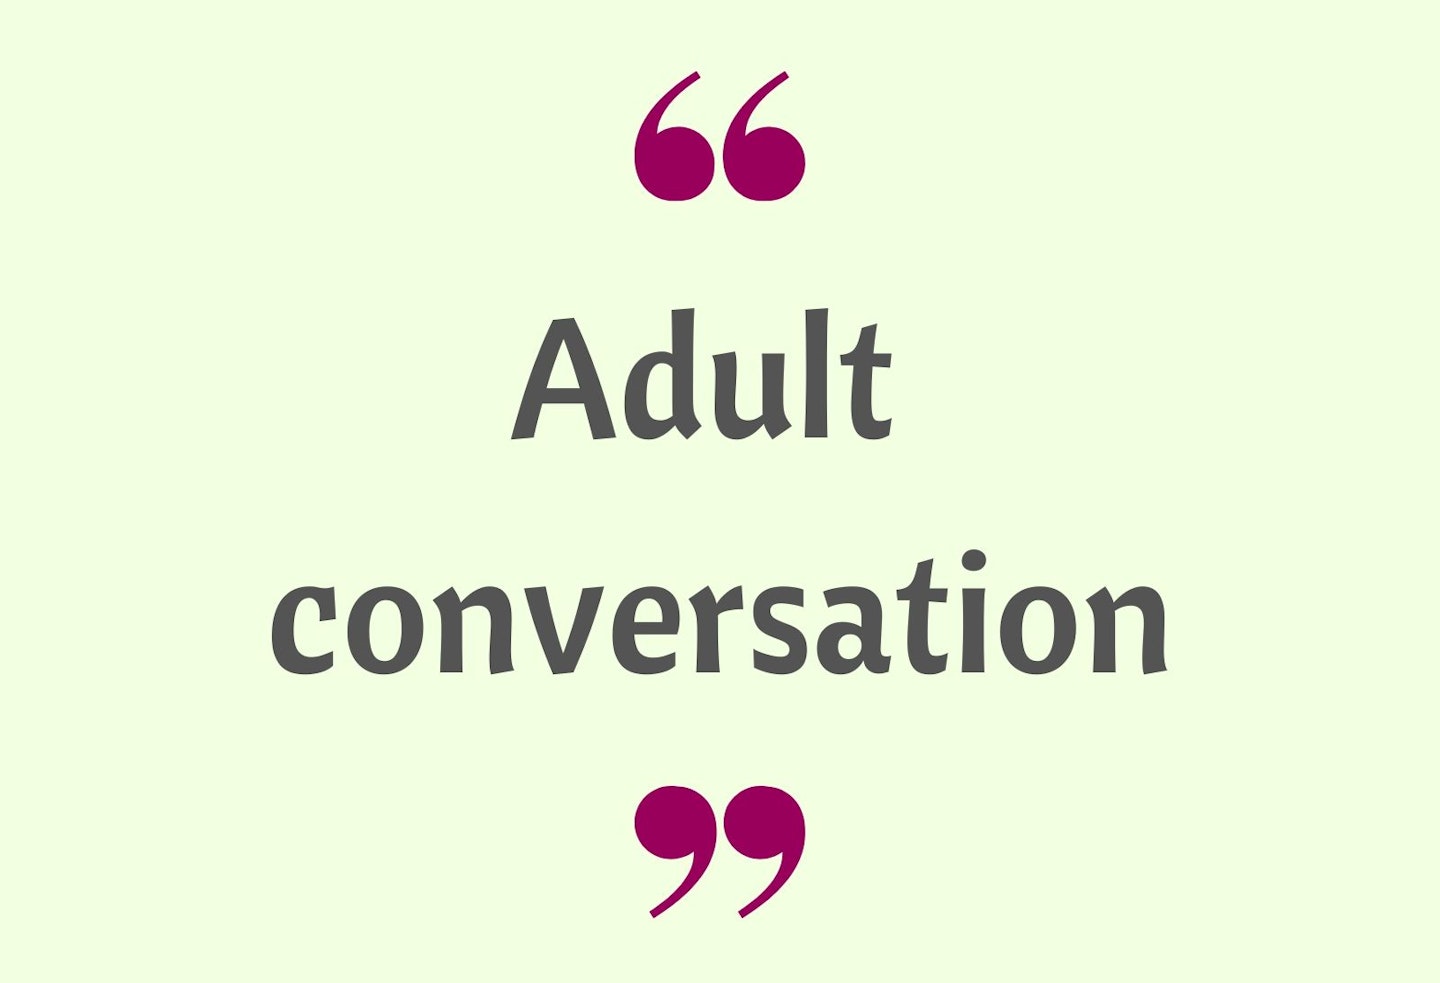 28) Adult conversation